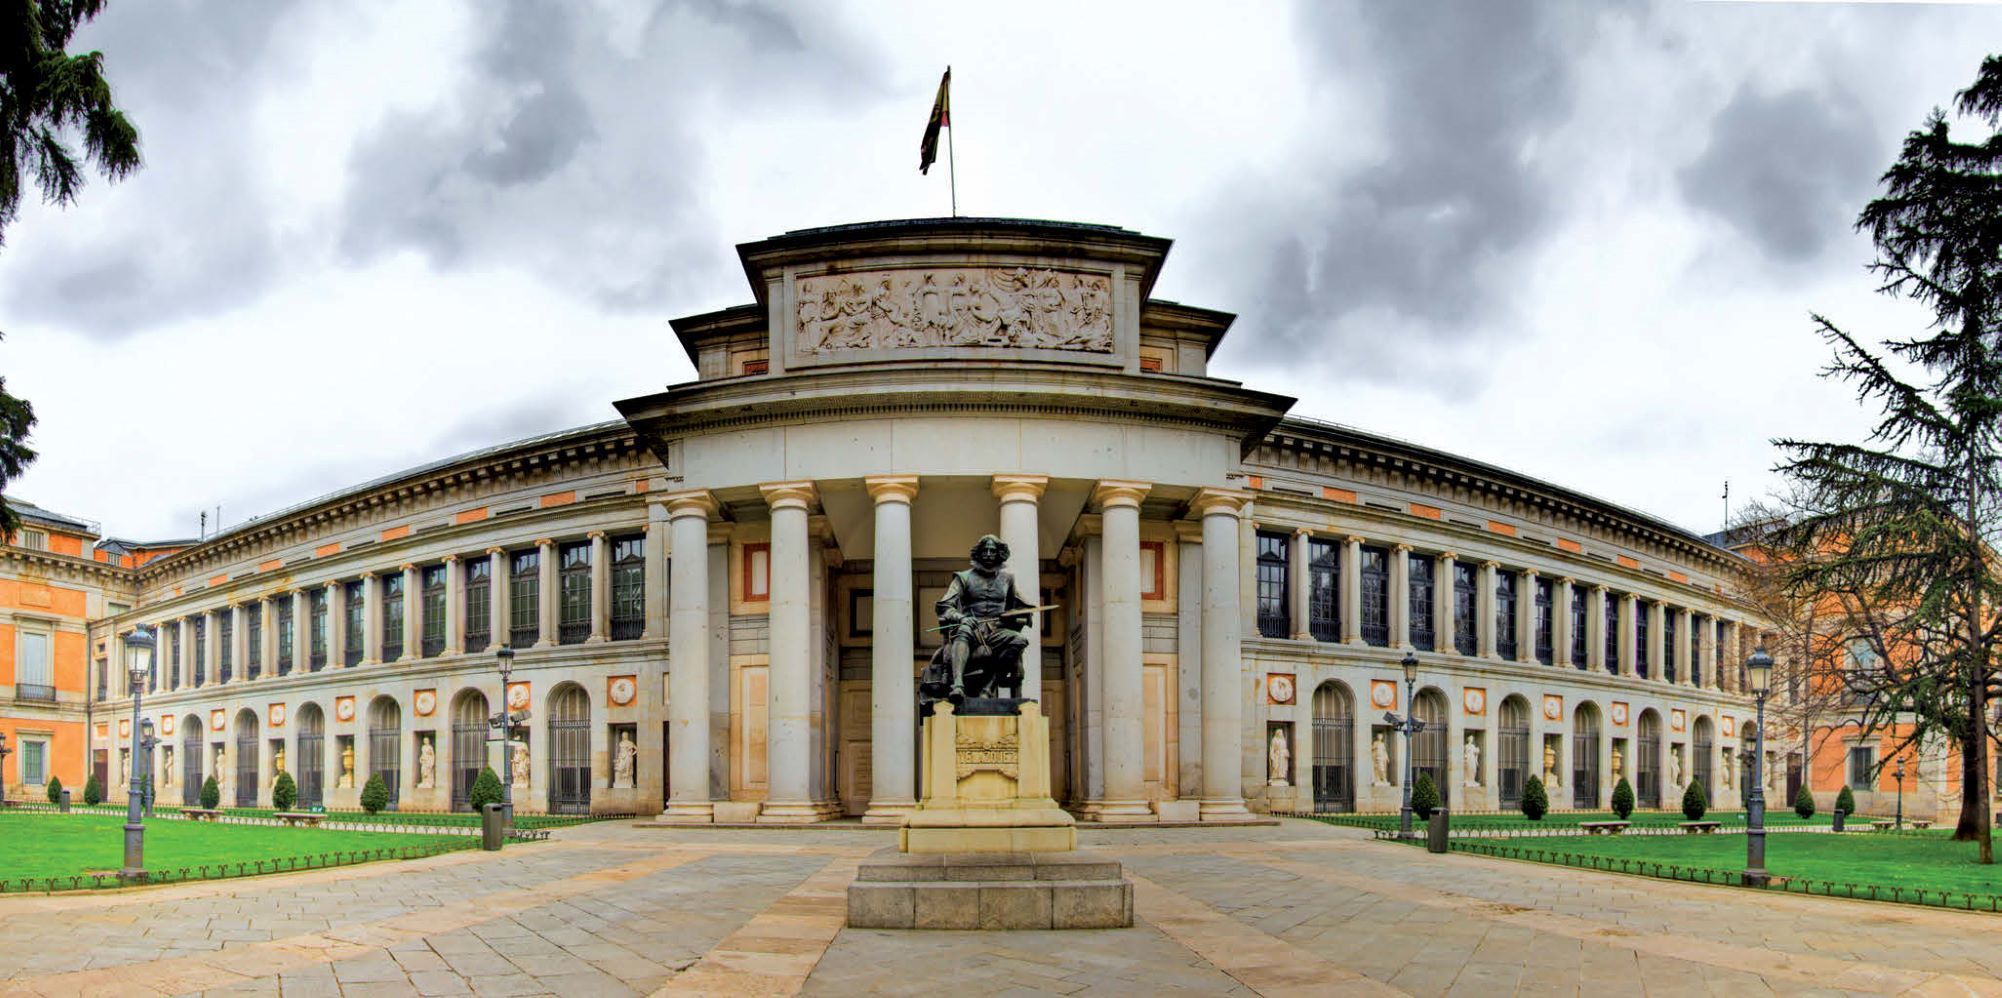 19 ноября 1819 года открылся музей Прадо 